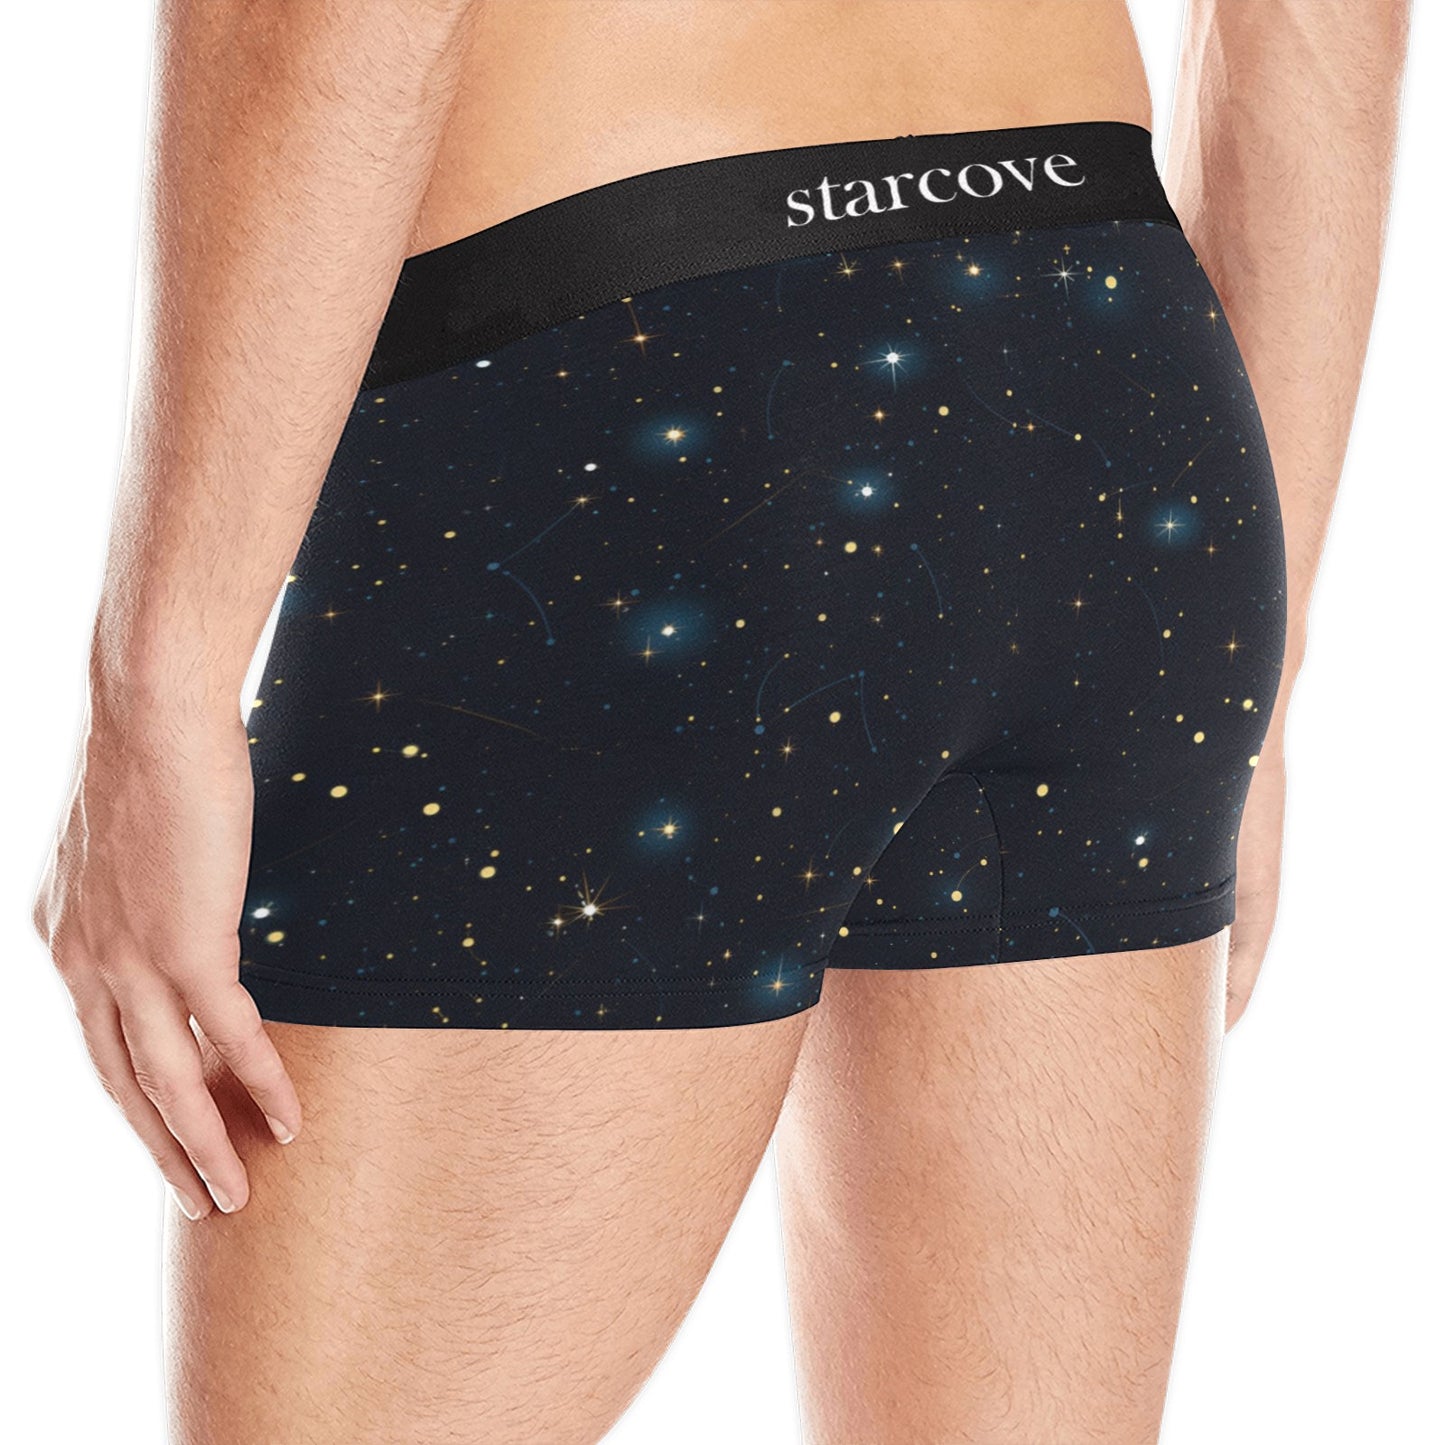 Constellation Galaxy Men Boxer Briefs, Stars Space Universe Underwear Pouch Funny Sexy Anniversary For Him Honeymoon Birthday Plus Size